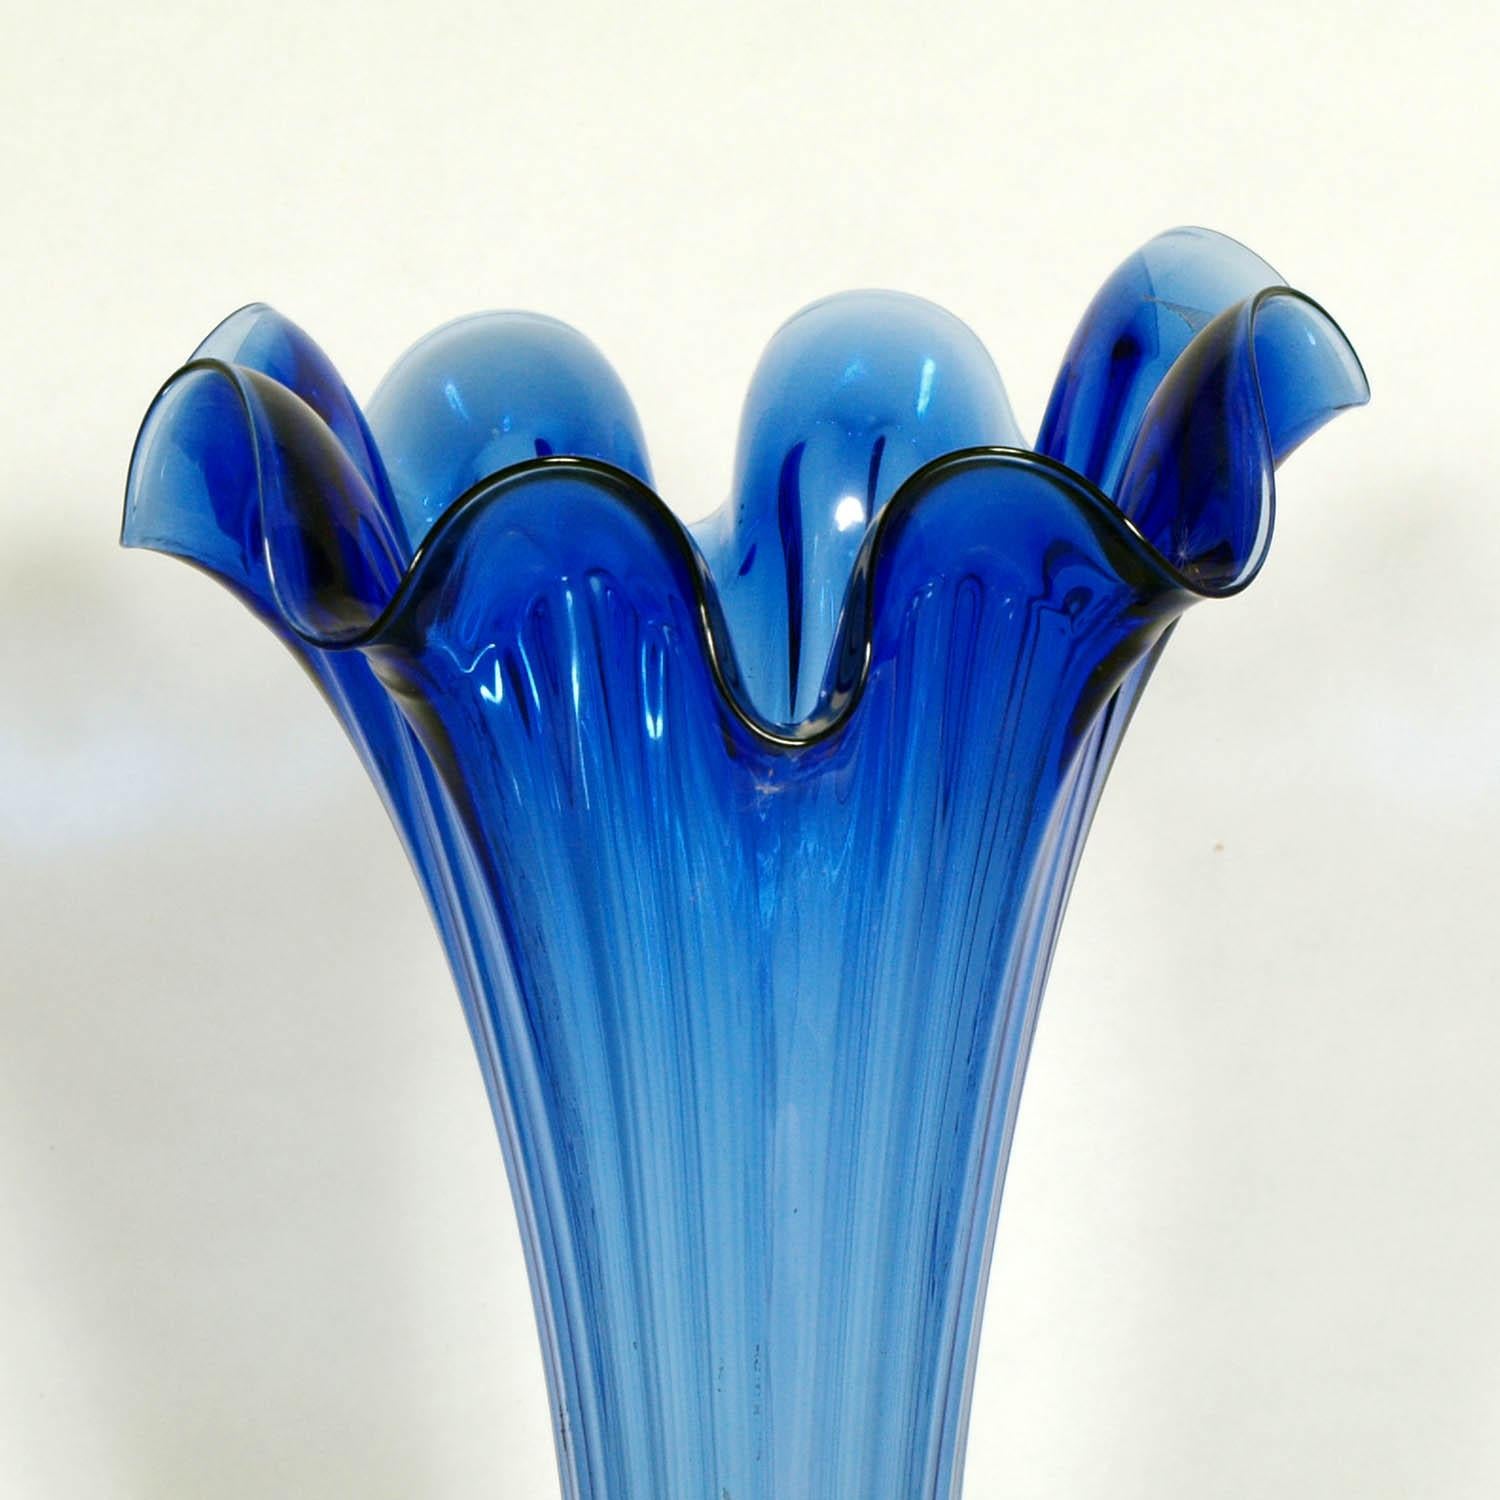 Early 20th Century Art Nouveau Blue Vase, Murano Glass 